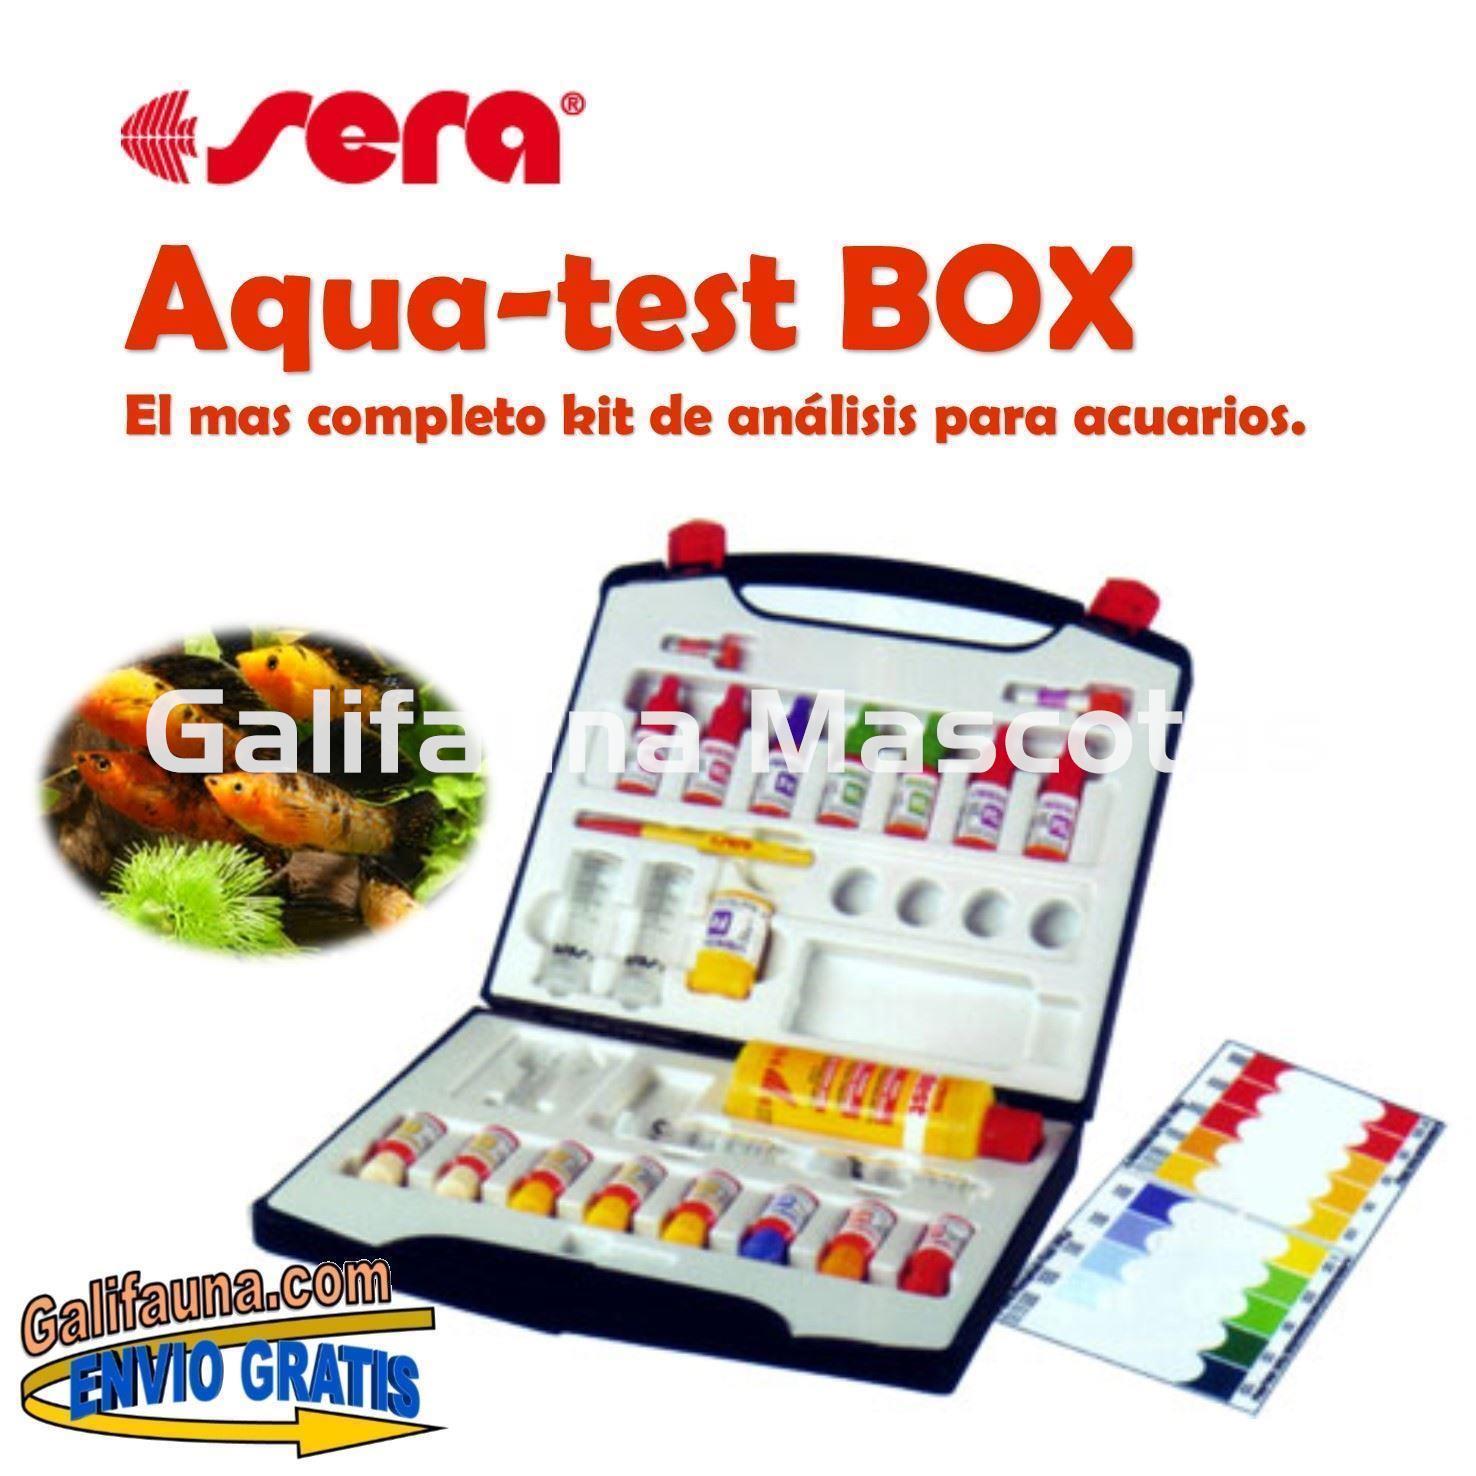 SERA Aqua-test box. Set de analisis profesional para aquarios - Imagen 1